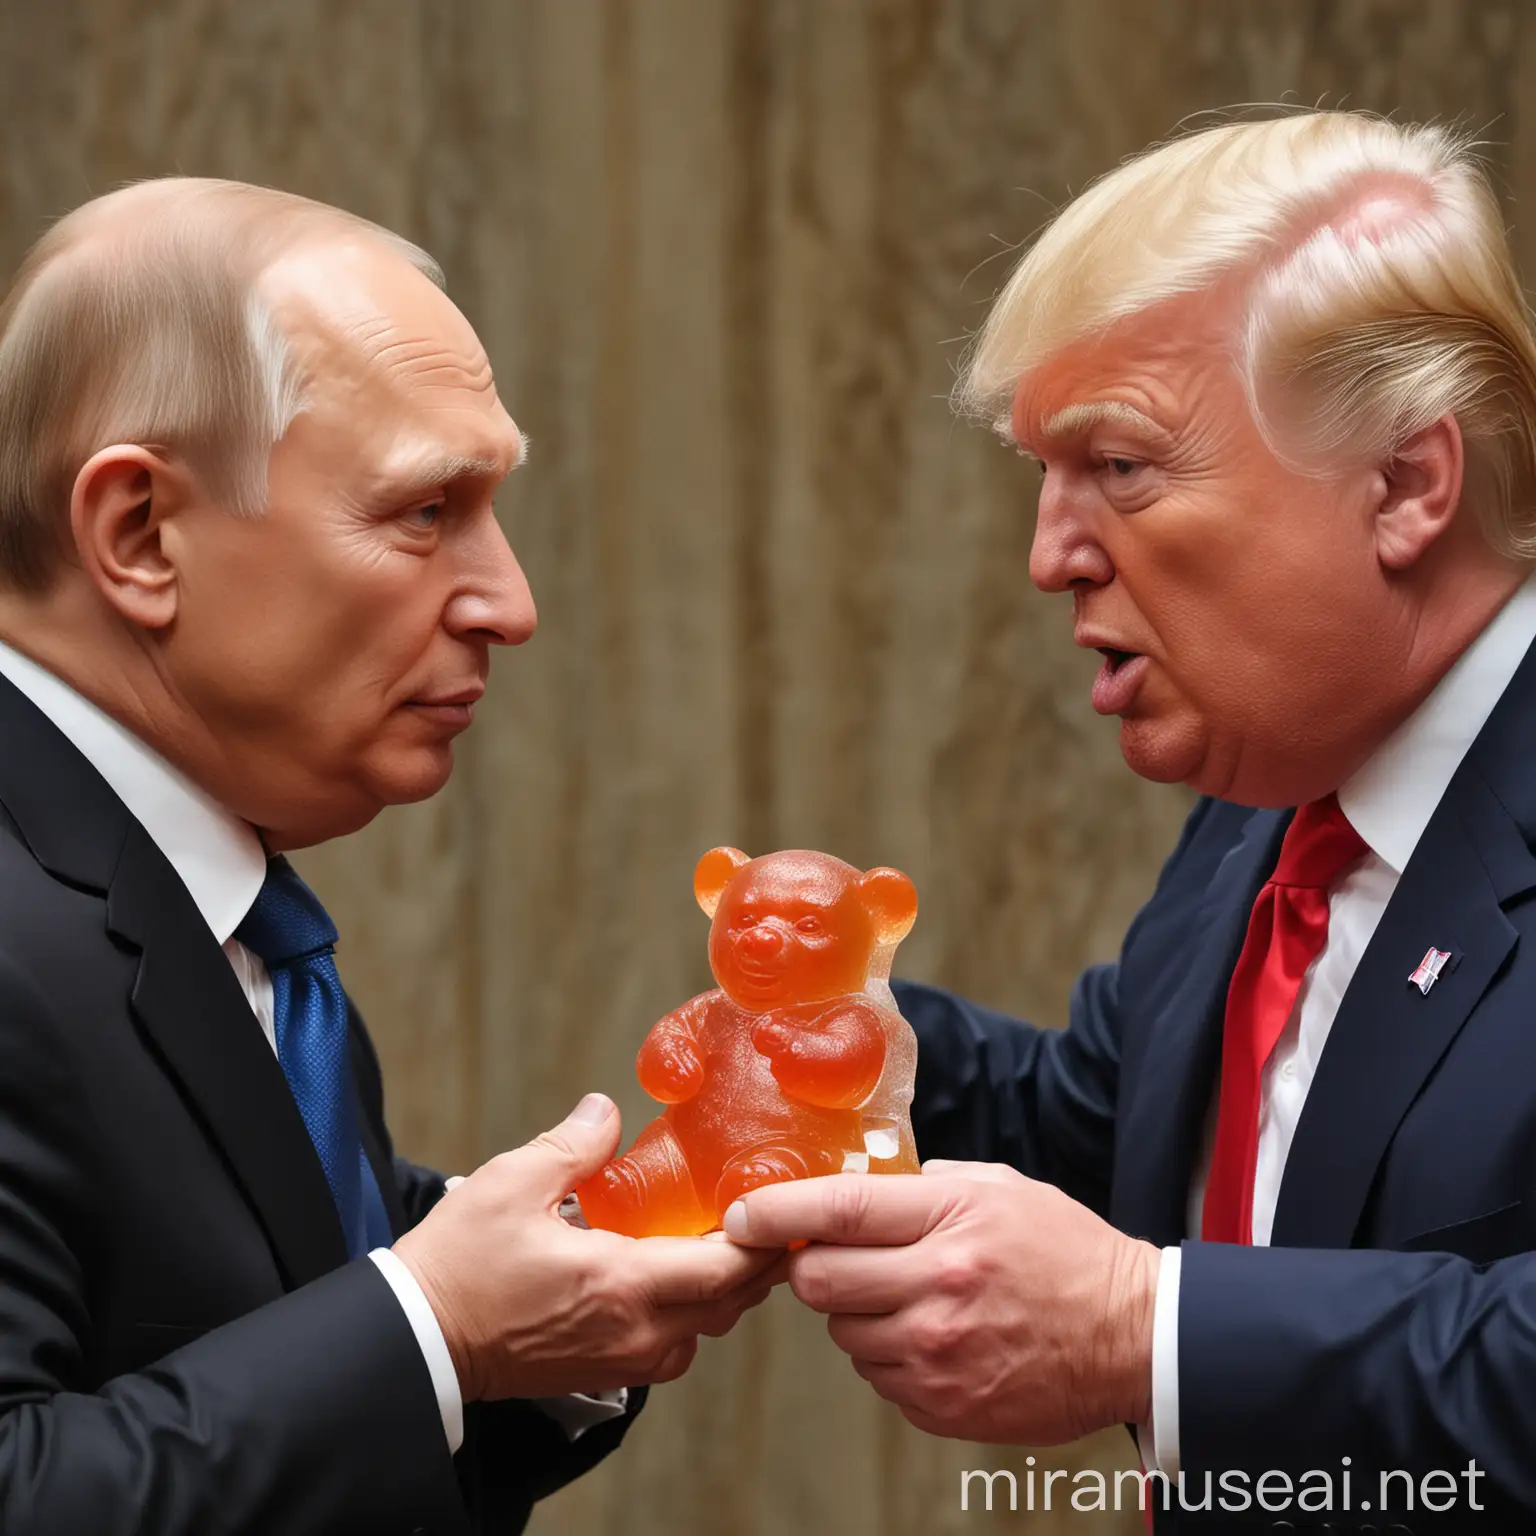 Vladimir Putin and Donald Trump, they are eating big gummy bears